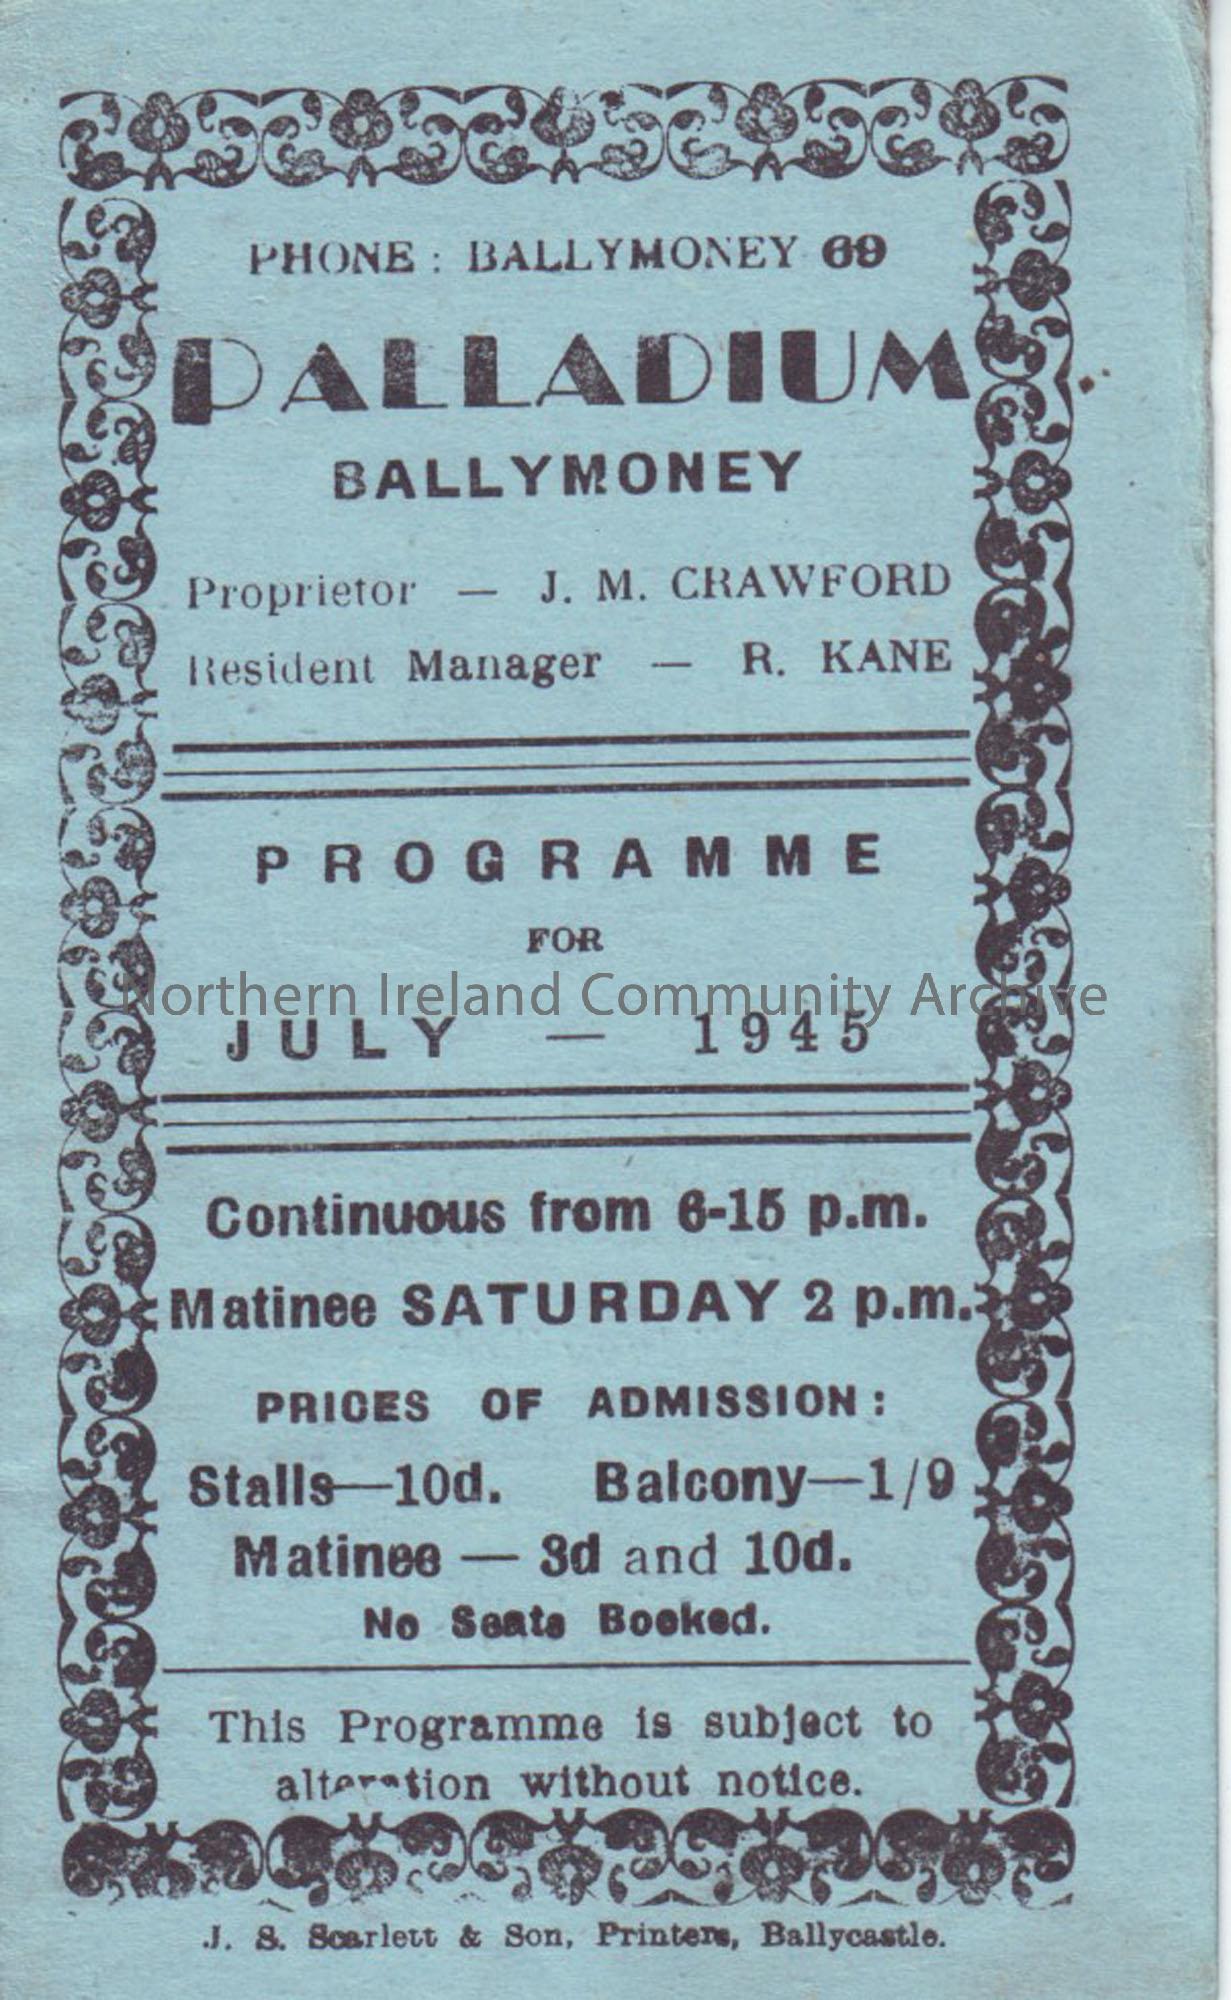 blue programme for Ballymoney Palladium cinema- July 1945